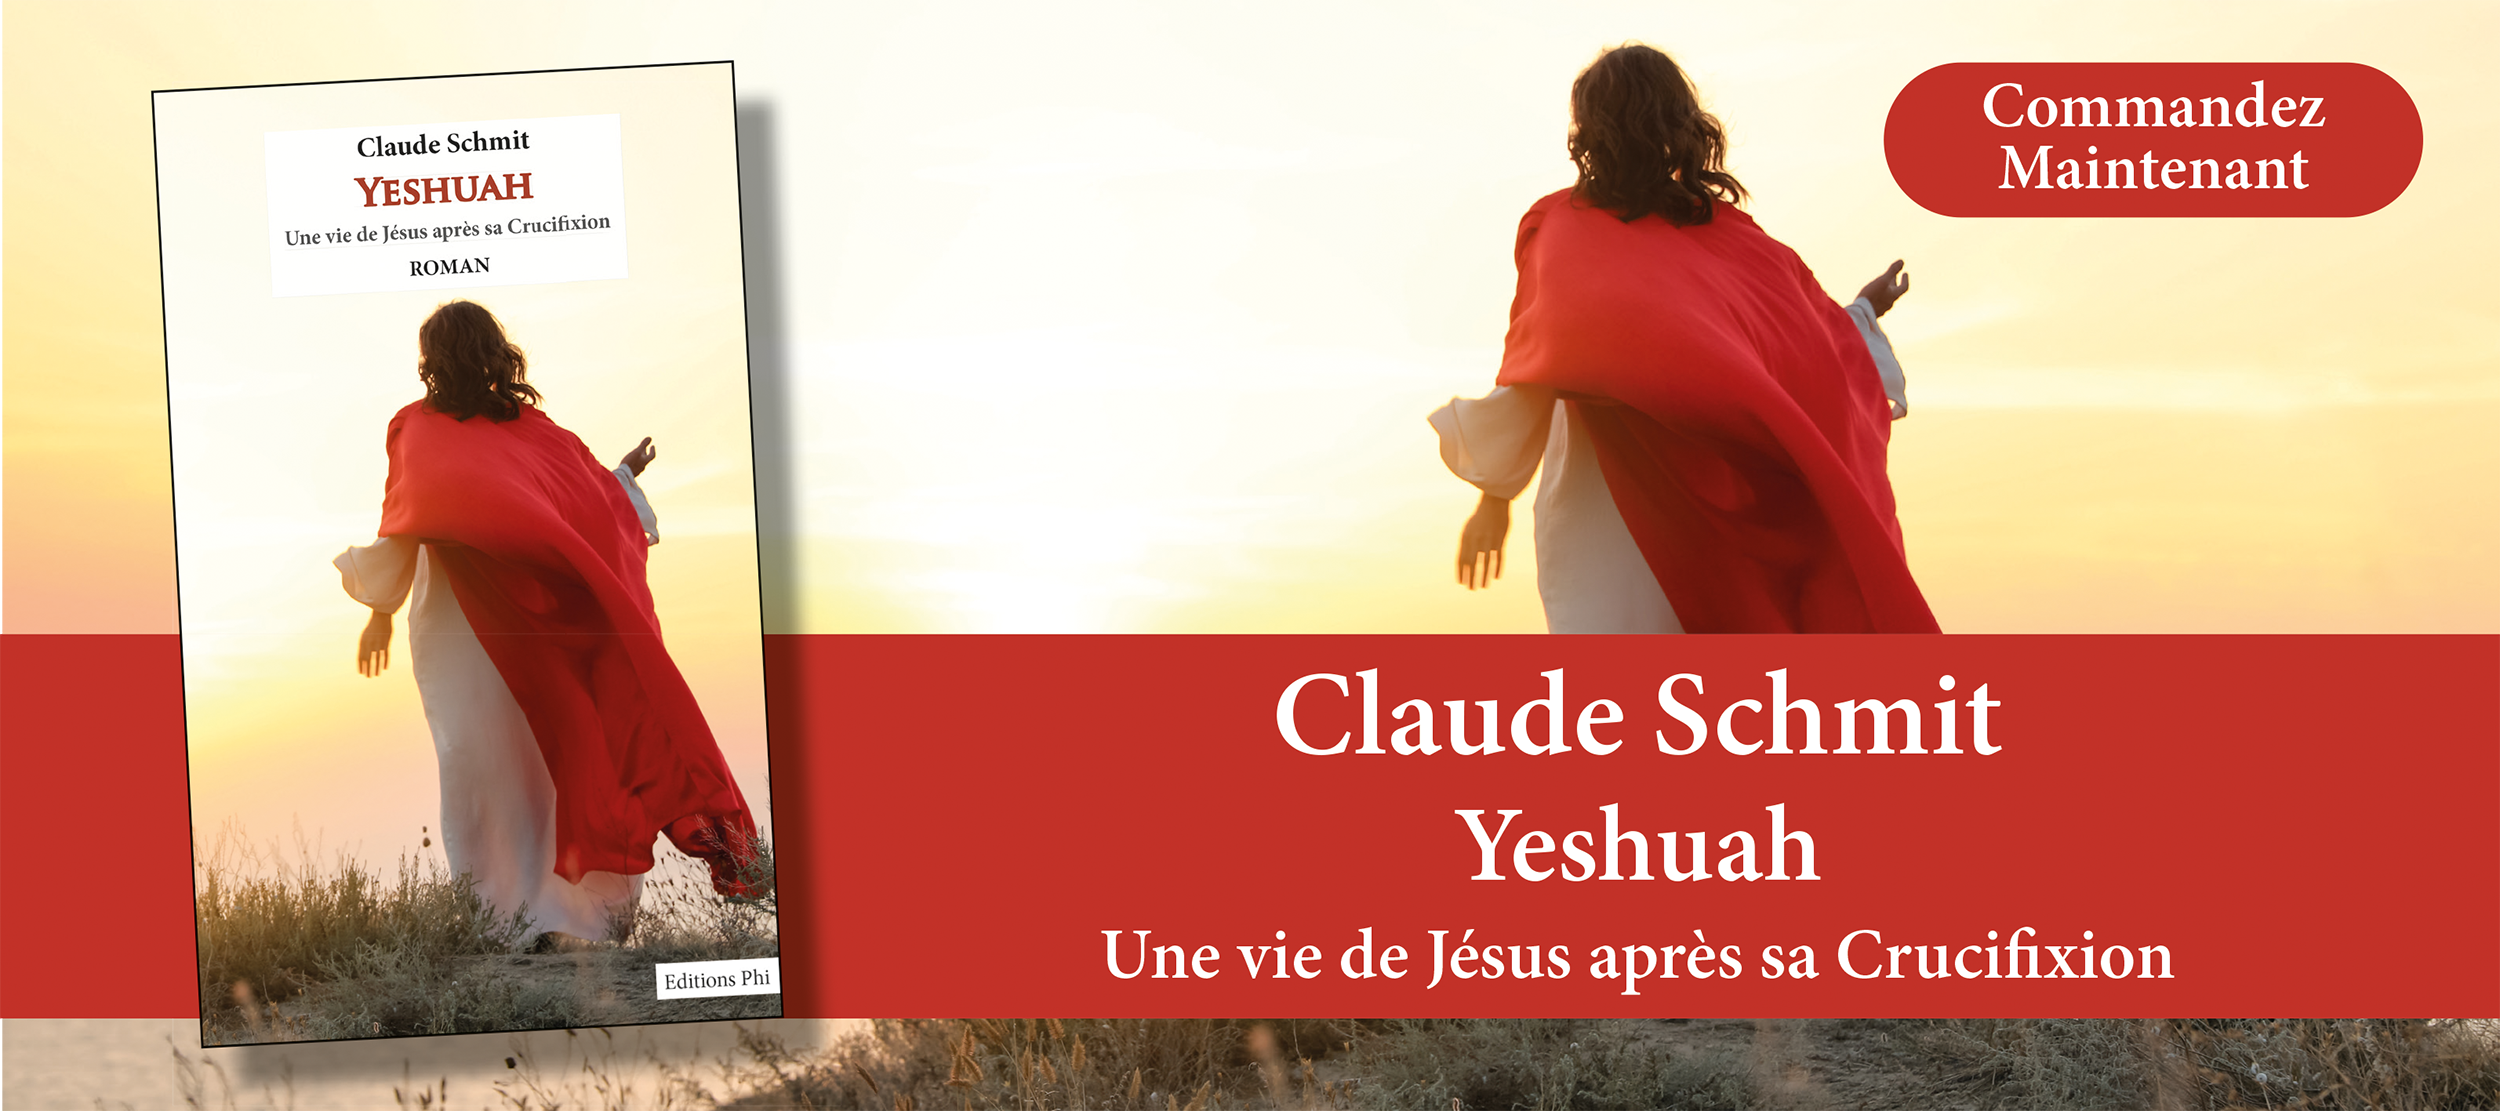 http://www.editionsphi.lu/fr/home/553-claude-schmit-yeshuah-une-vie-de-jesus-apres-sa-crucifixion.html